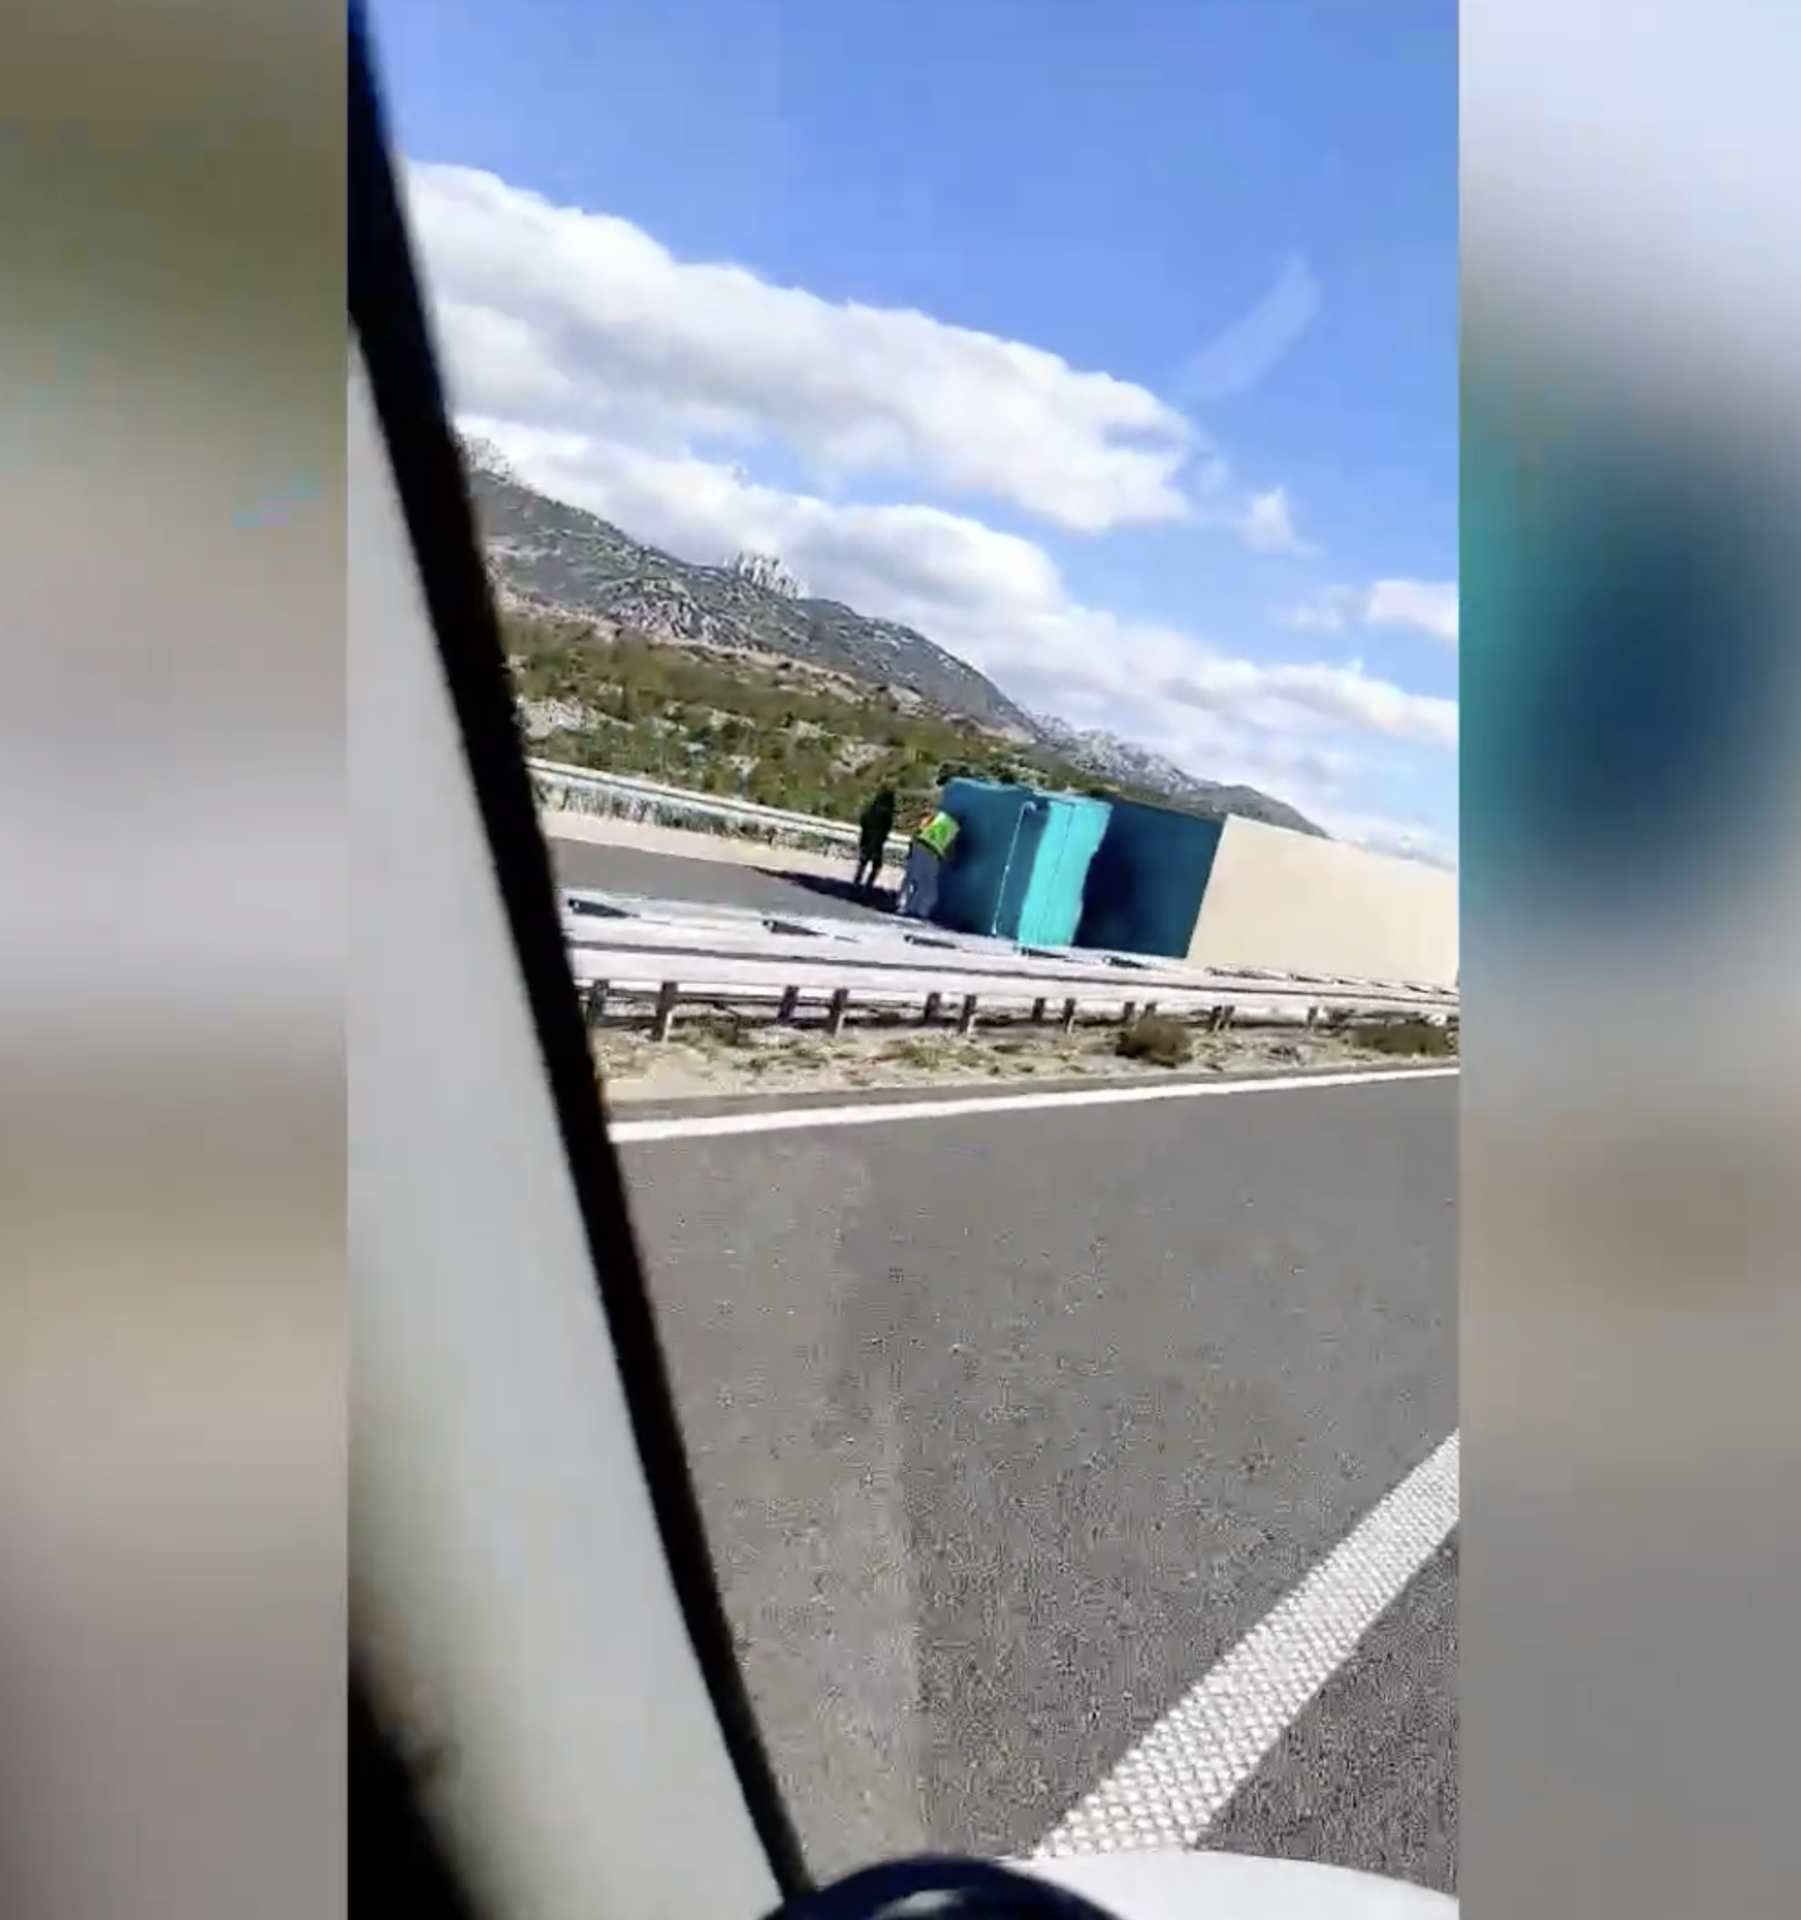 VIDEO Na A1 kraj Posedarja se zbog vjetra prevrnuo kamion